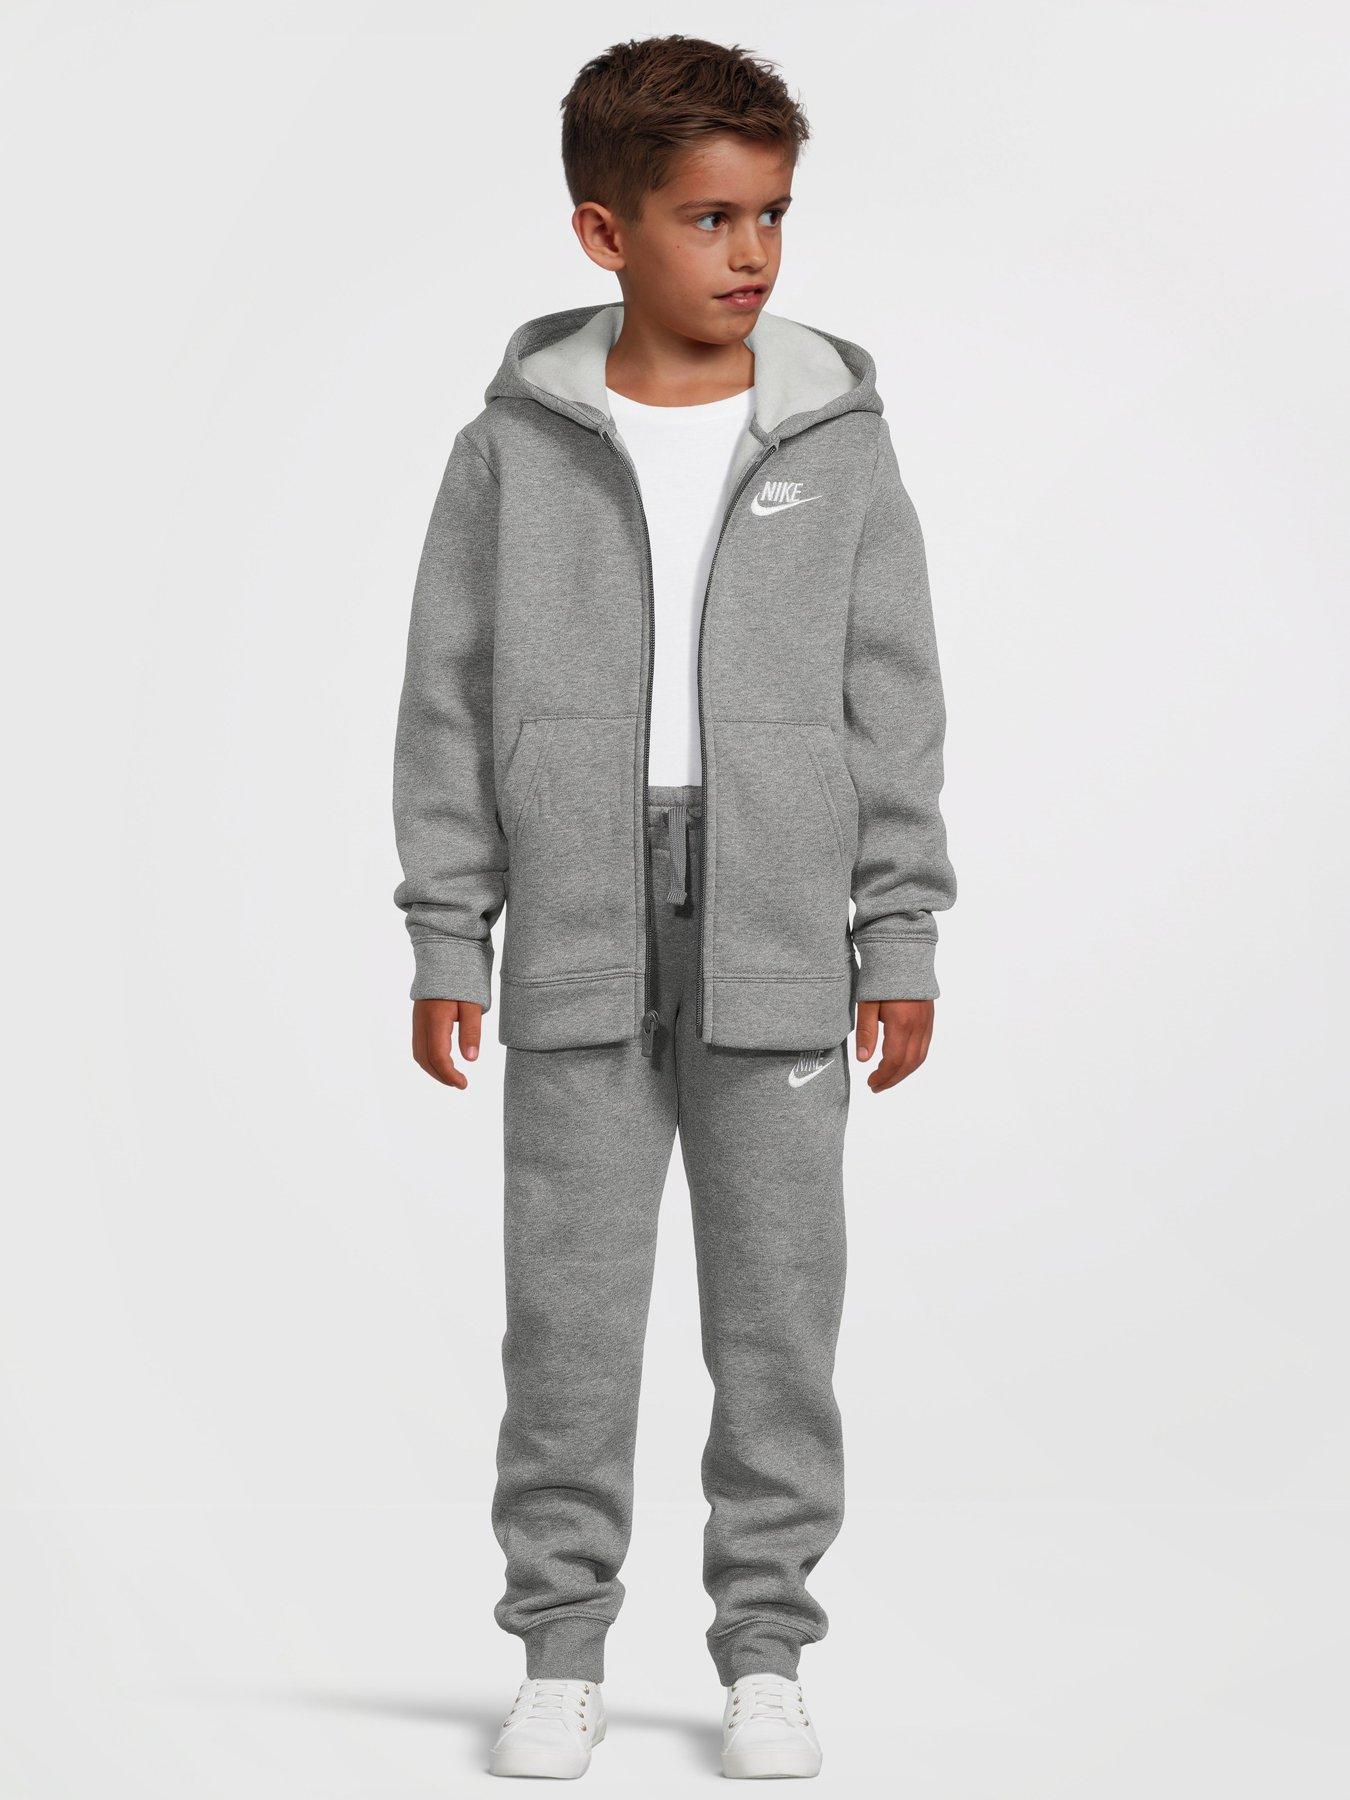 Fugtig emulering Dangle Nike Sportswear Kids Core Tracksuit Jogger Set - Dark Grey | Very Ireland